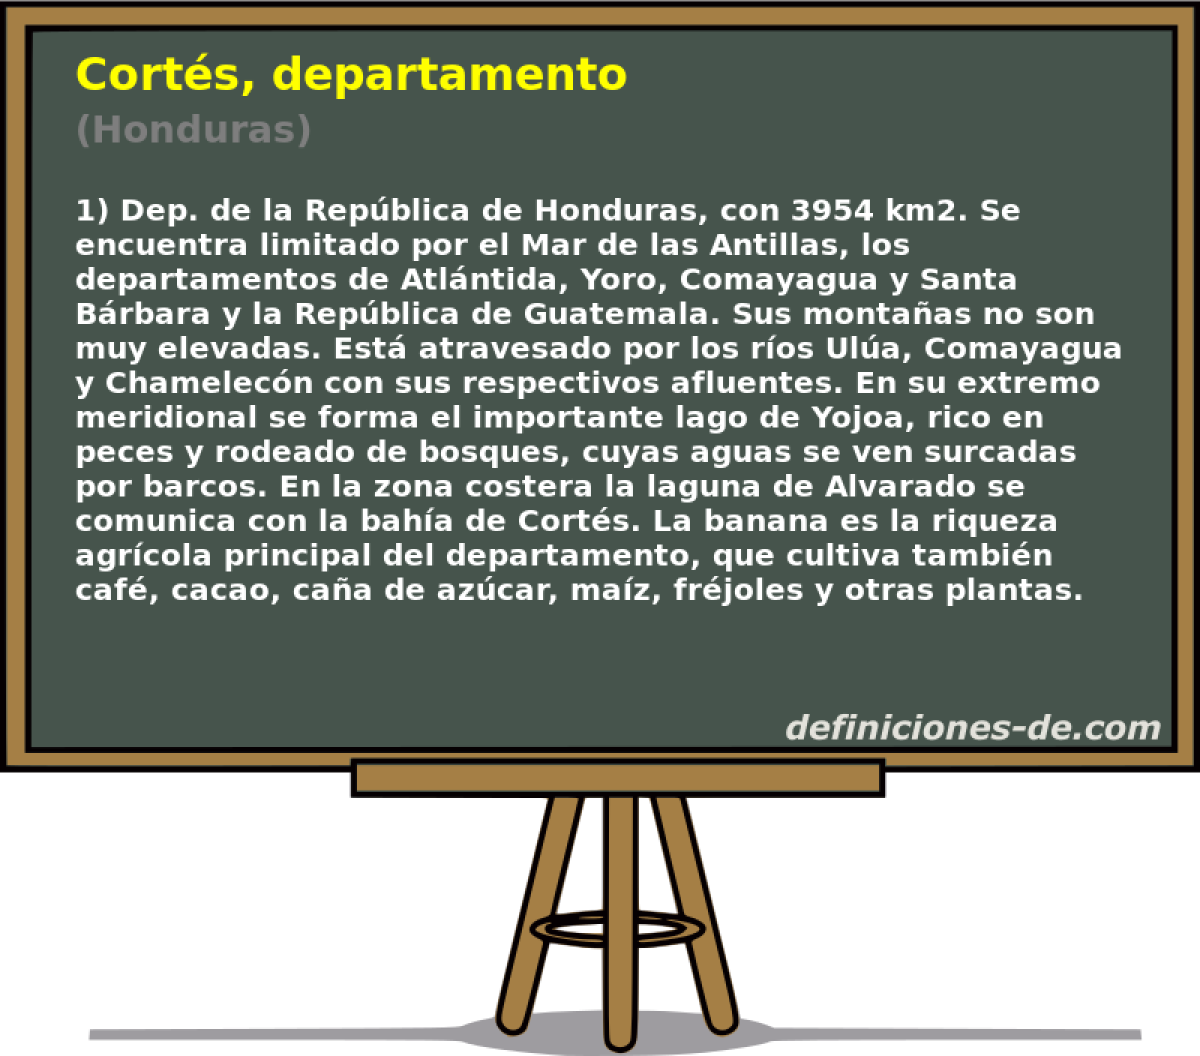 Corts, departamento (Honduras)